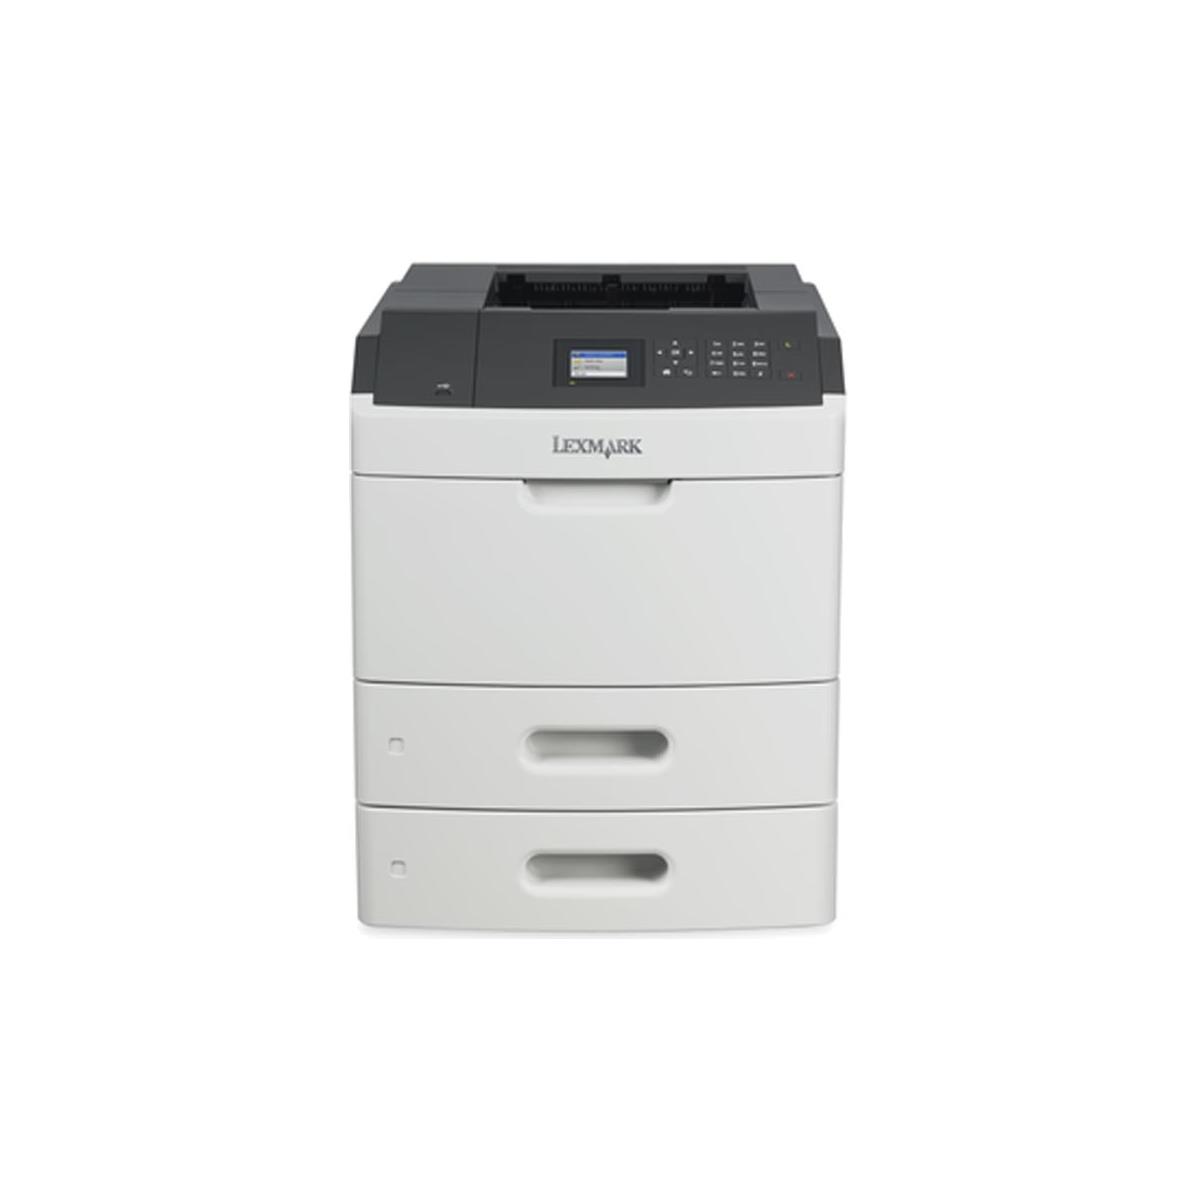 Lexmark MS811dtn Monochrome Laser Printer -  40G0440